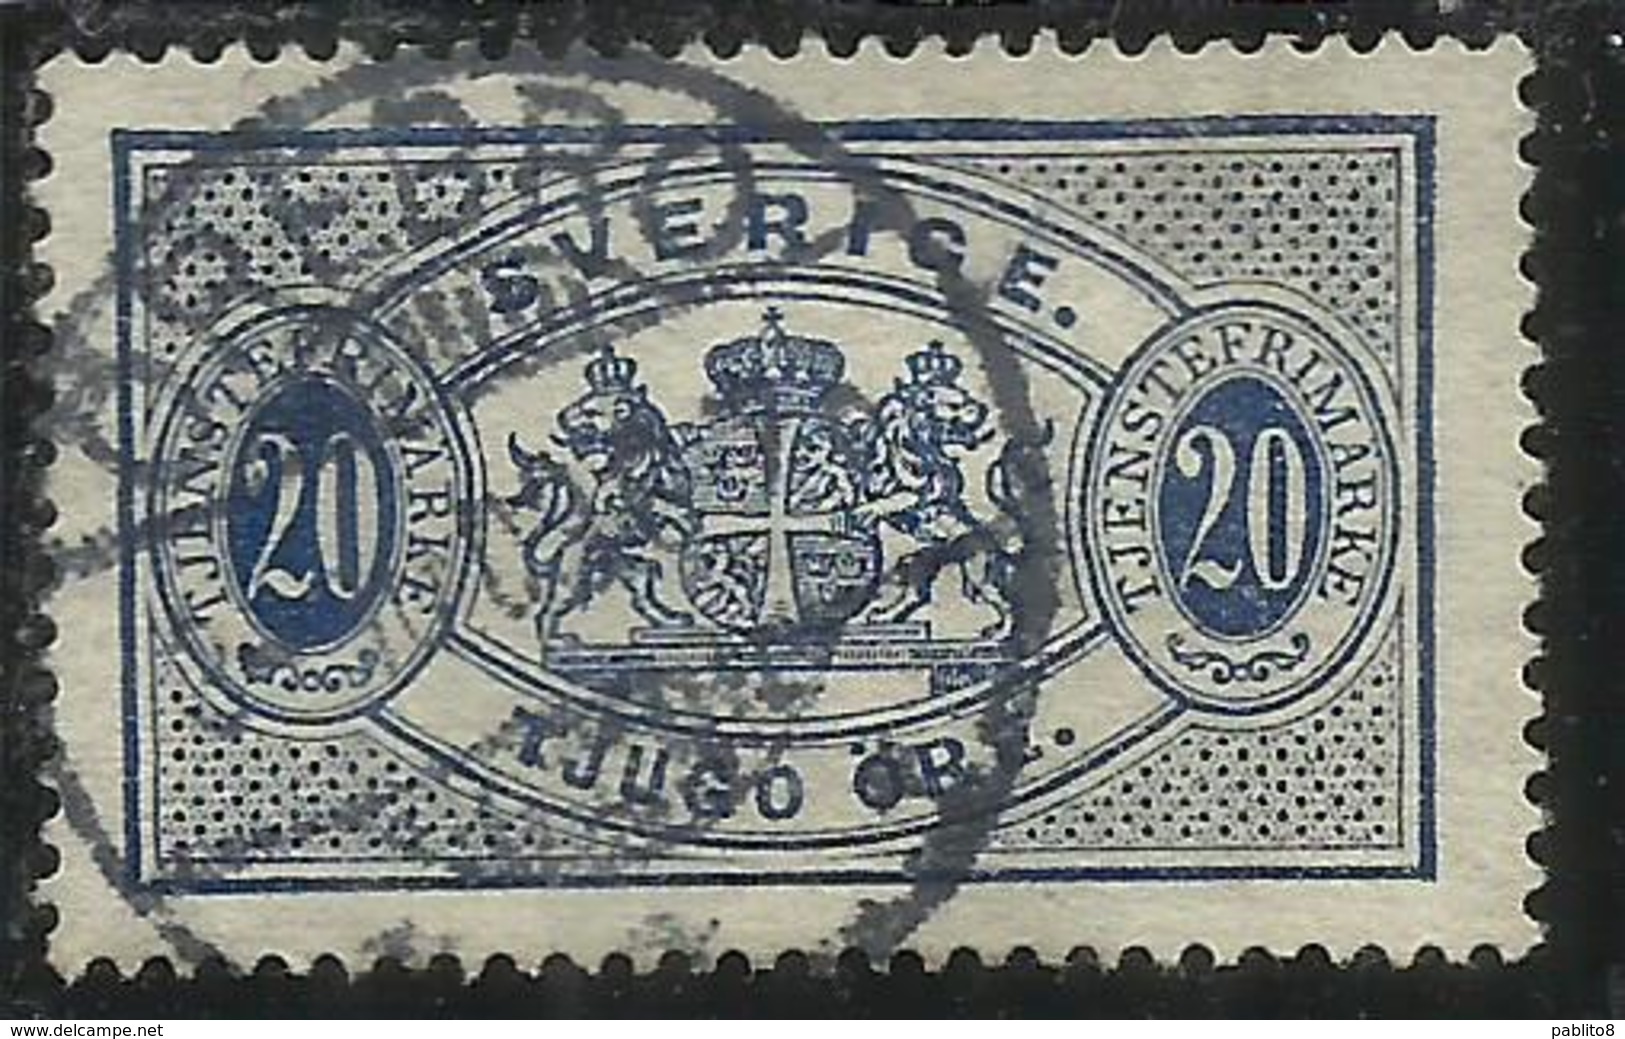 SWEDEN SVERIGE SVEZIA SUEDE 1881 1895 OFFICIAL STAMPS ORE 20o USATO USED OBLITERE' - Revenue Stamps